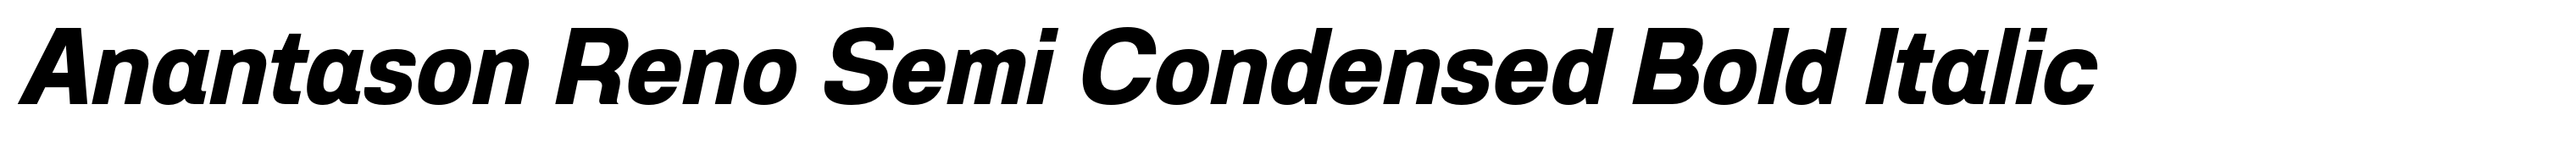 Anantason Reno Semi Condensed Bold Italic